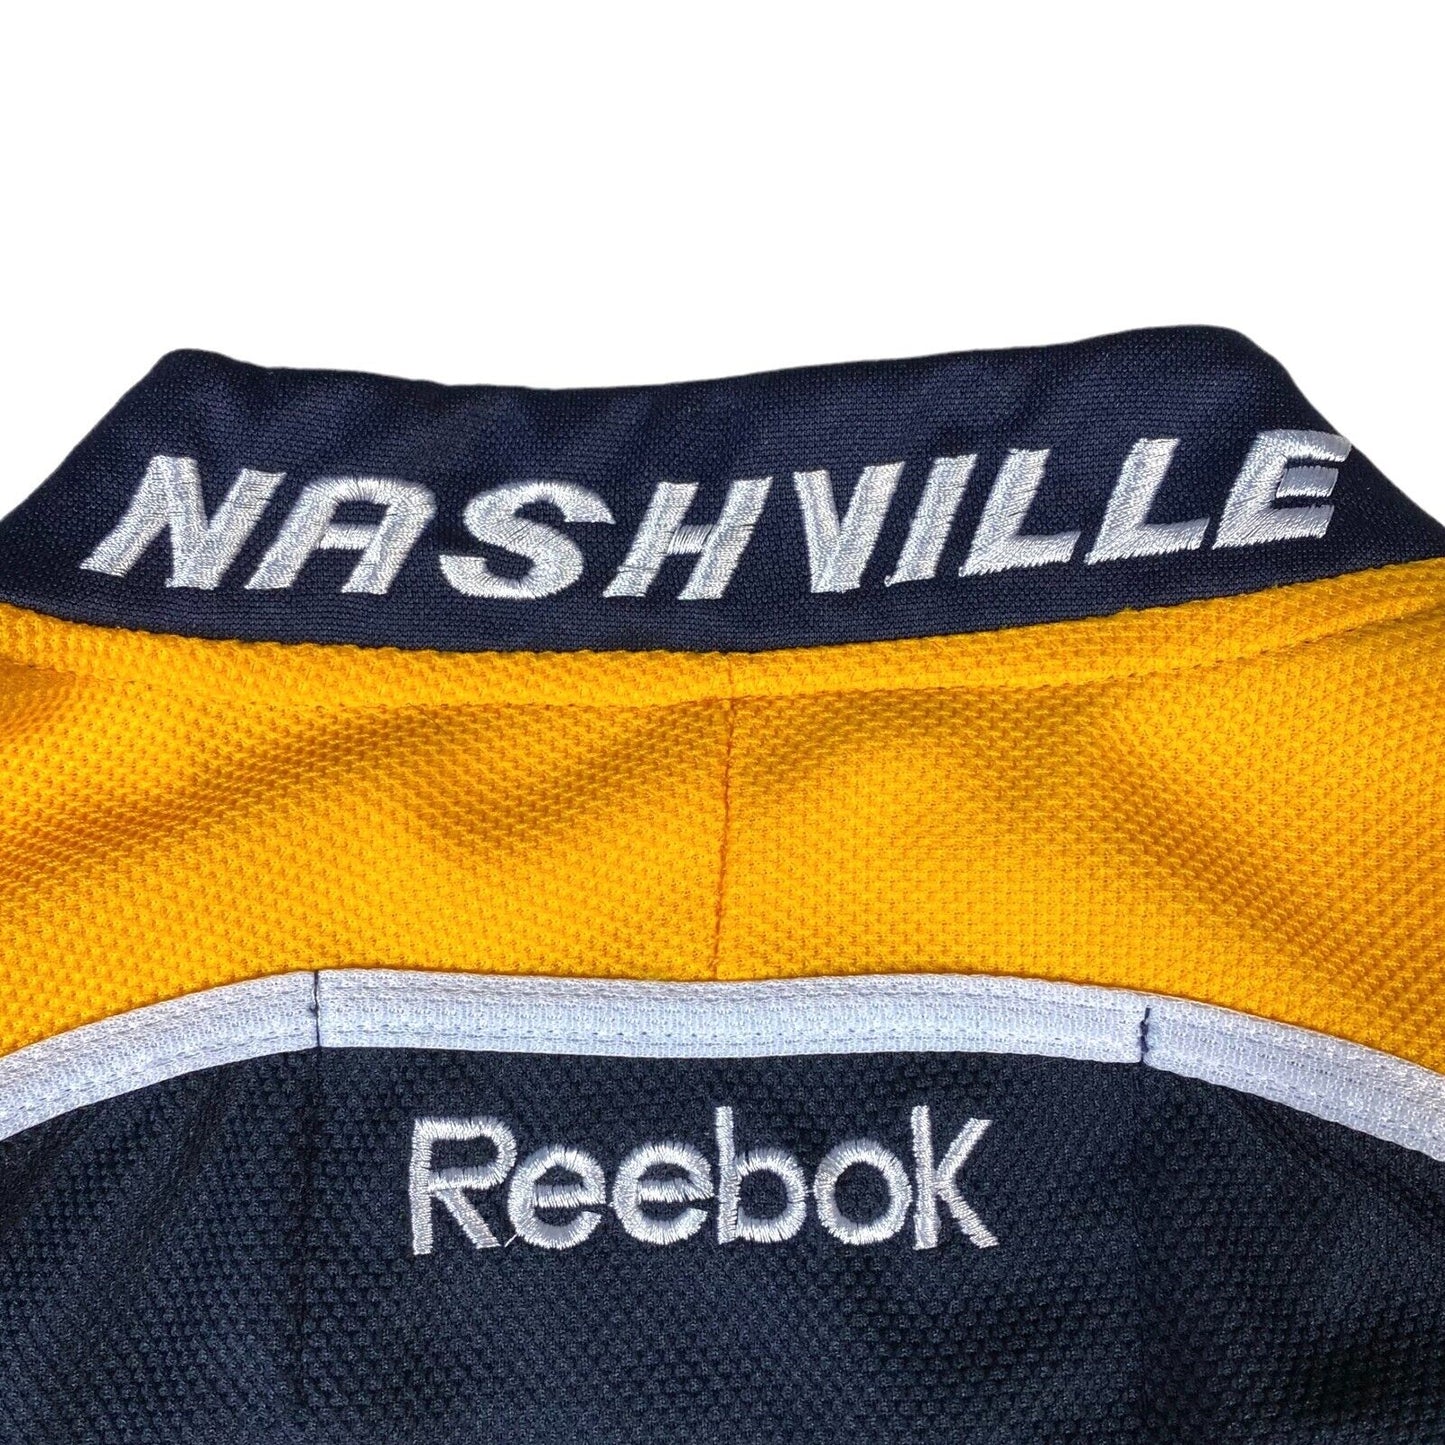 P.K. Subban Nashville Predators Reebok Ccm Authentic Stitched Jersey